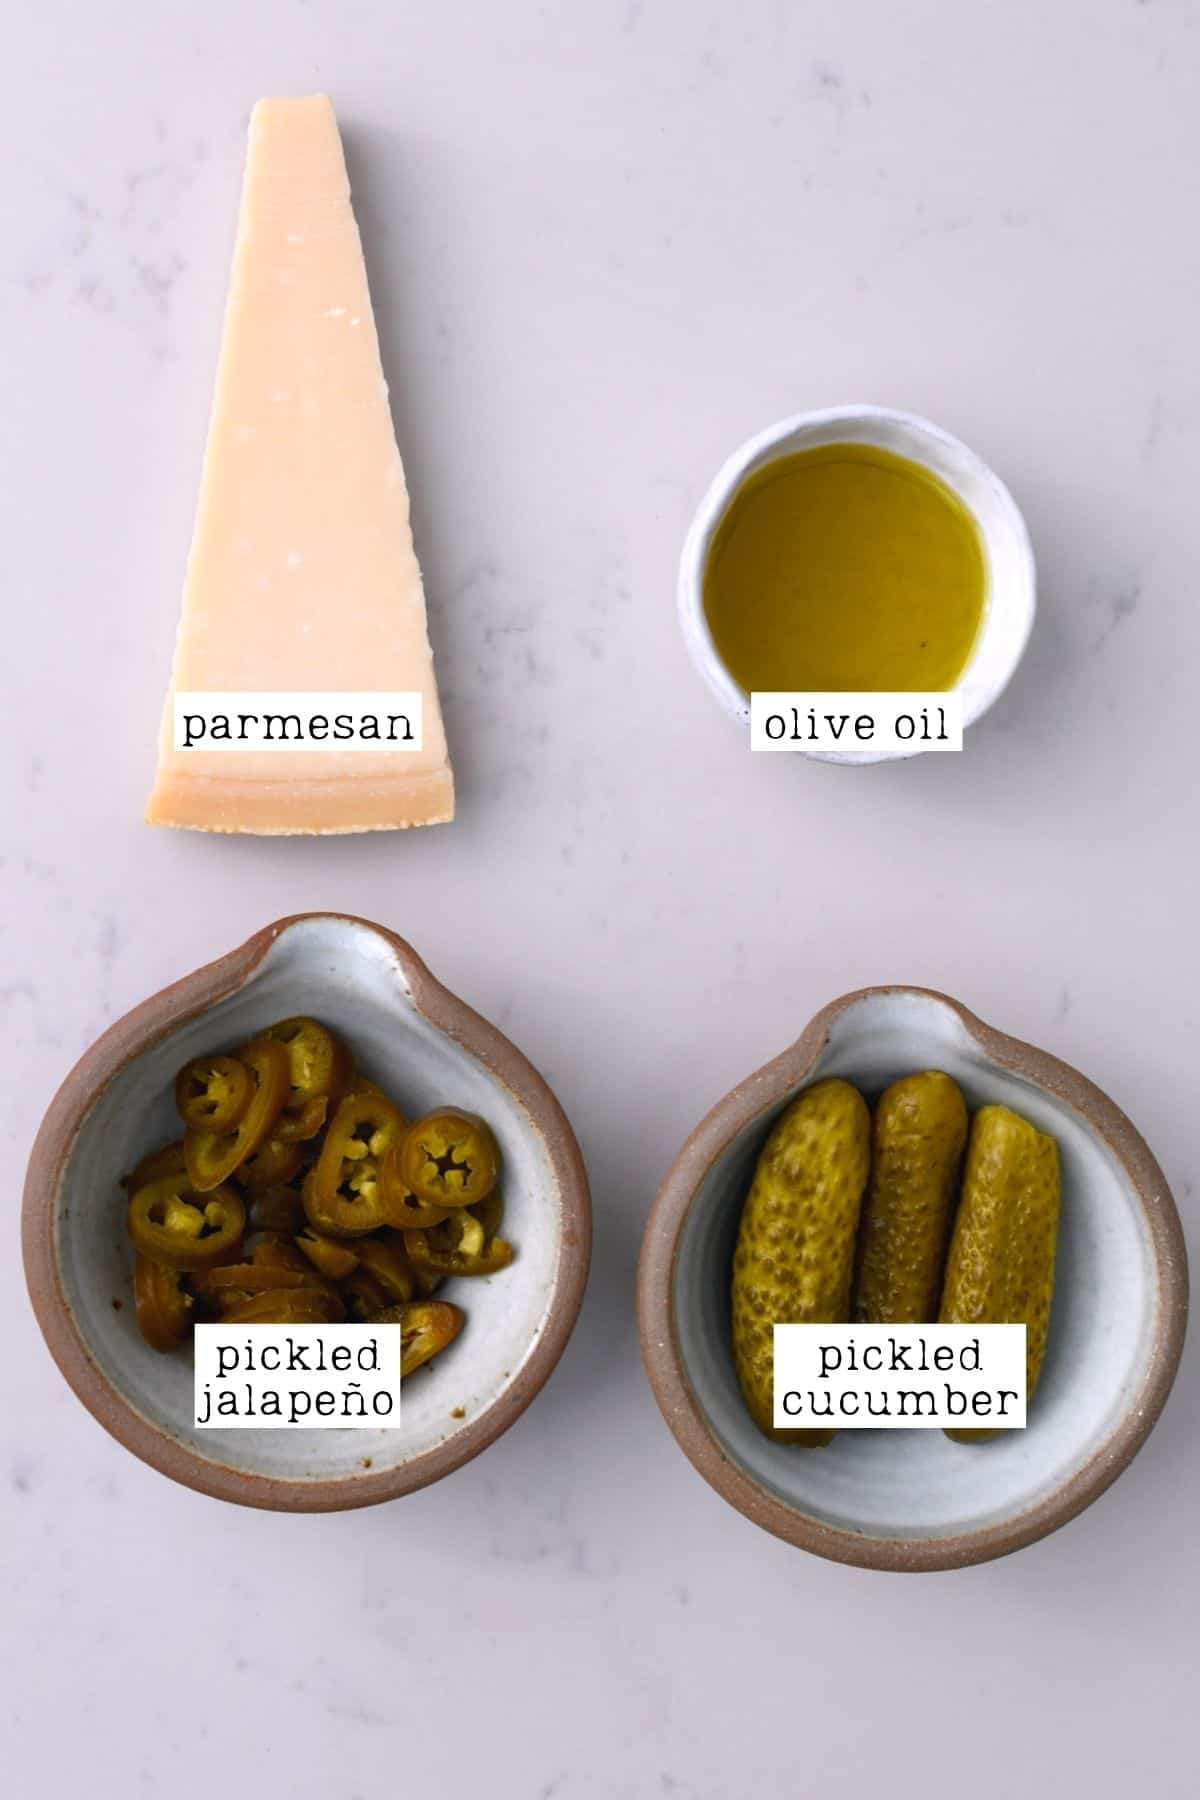 Ingredients for parmesan crisps